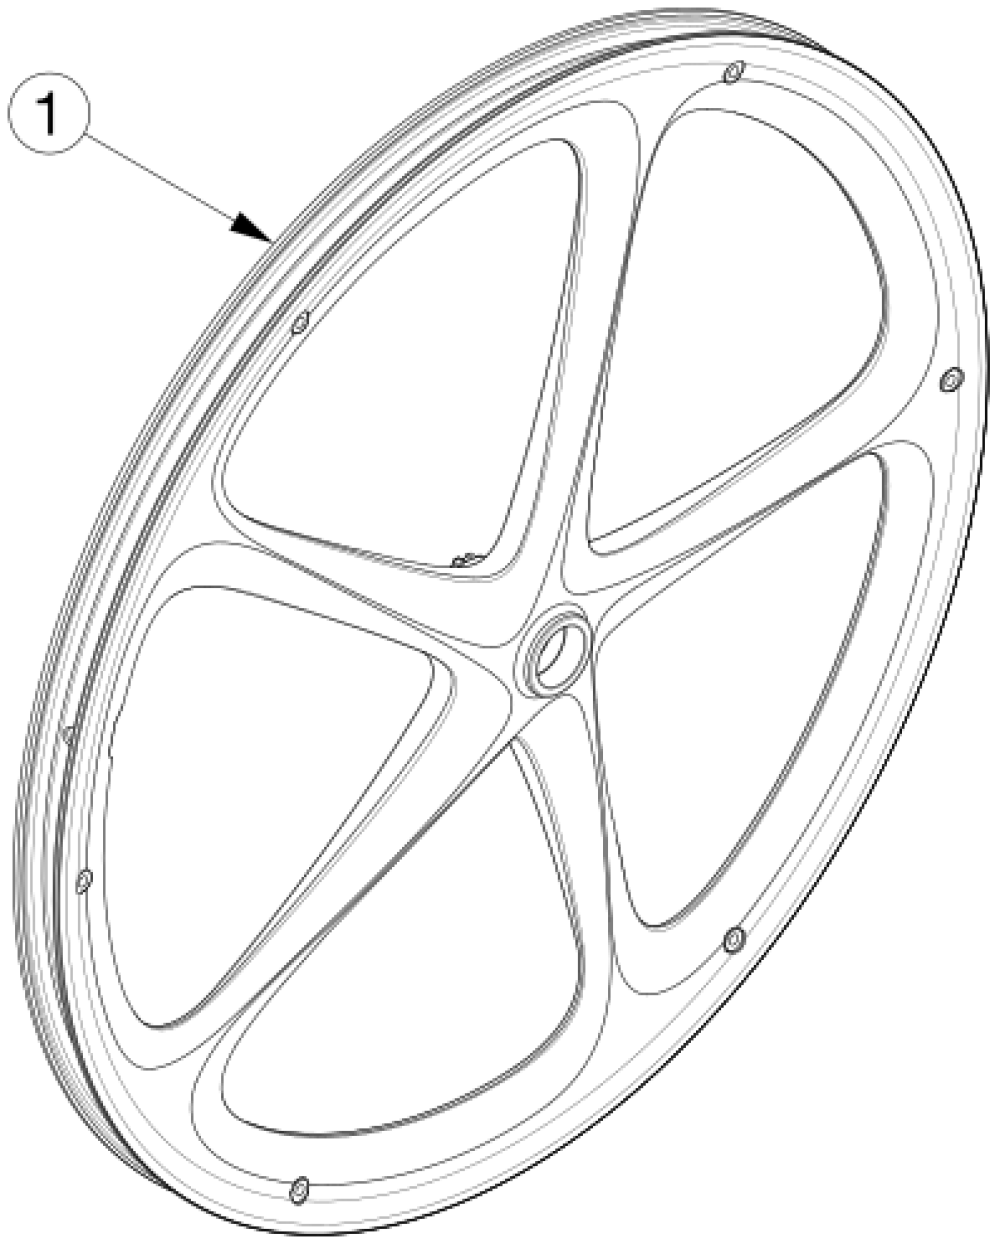 Focus Wheels - Maxx Mag parts diagram